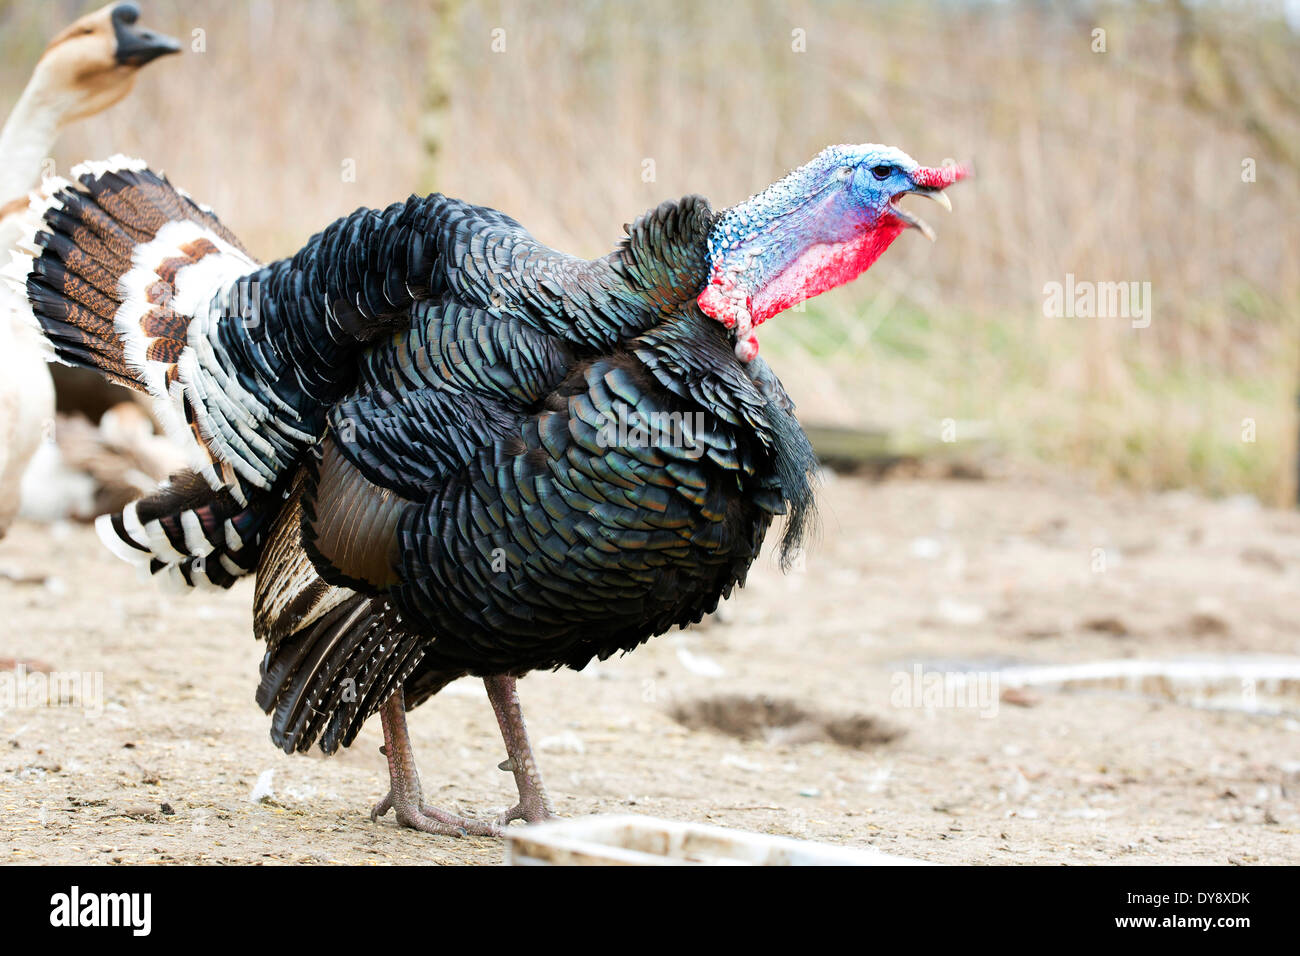 Turkey on the farm Stock Photo